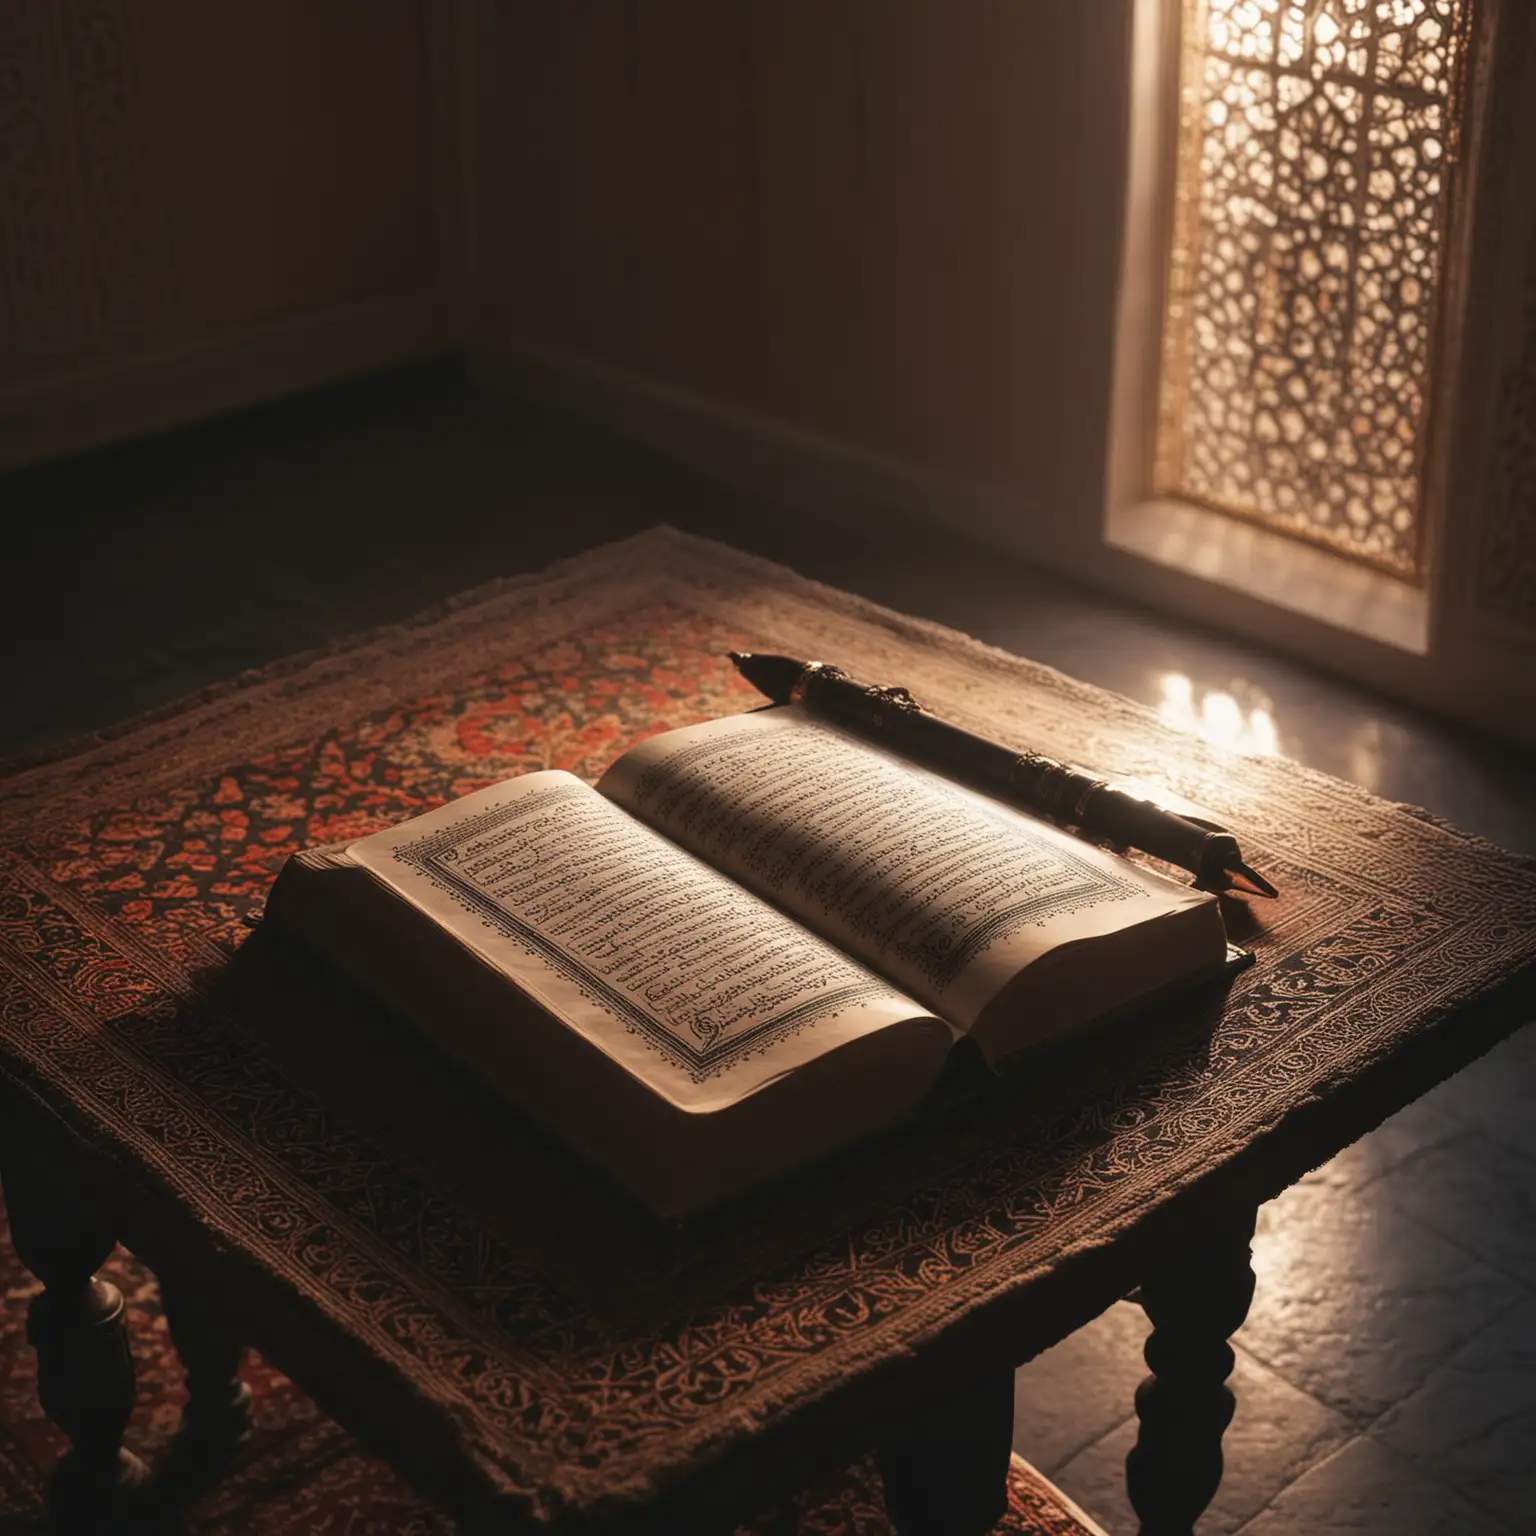 Beautiful Mosque Interior Illuminated Quran on Reading Table